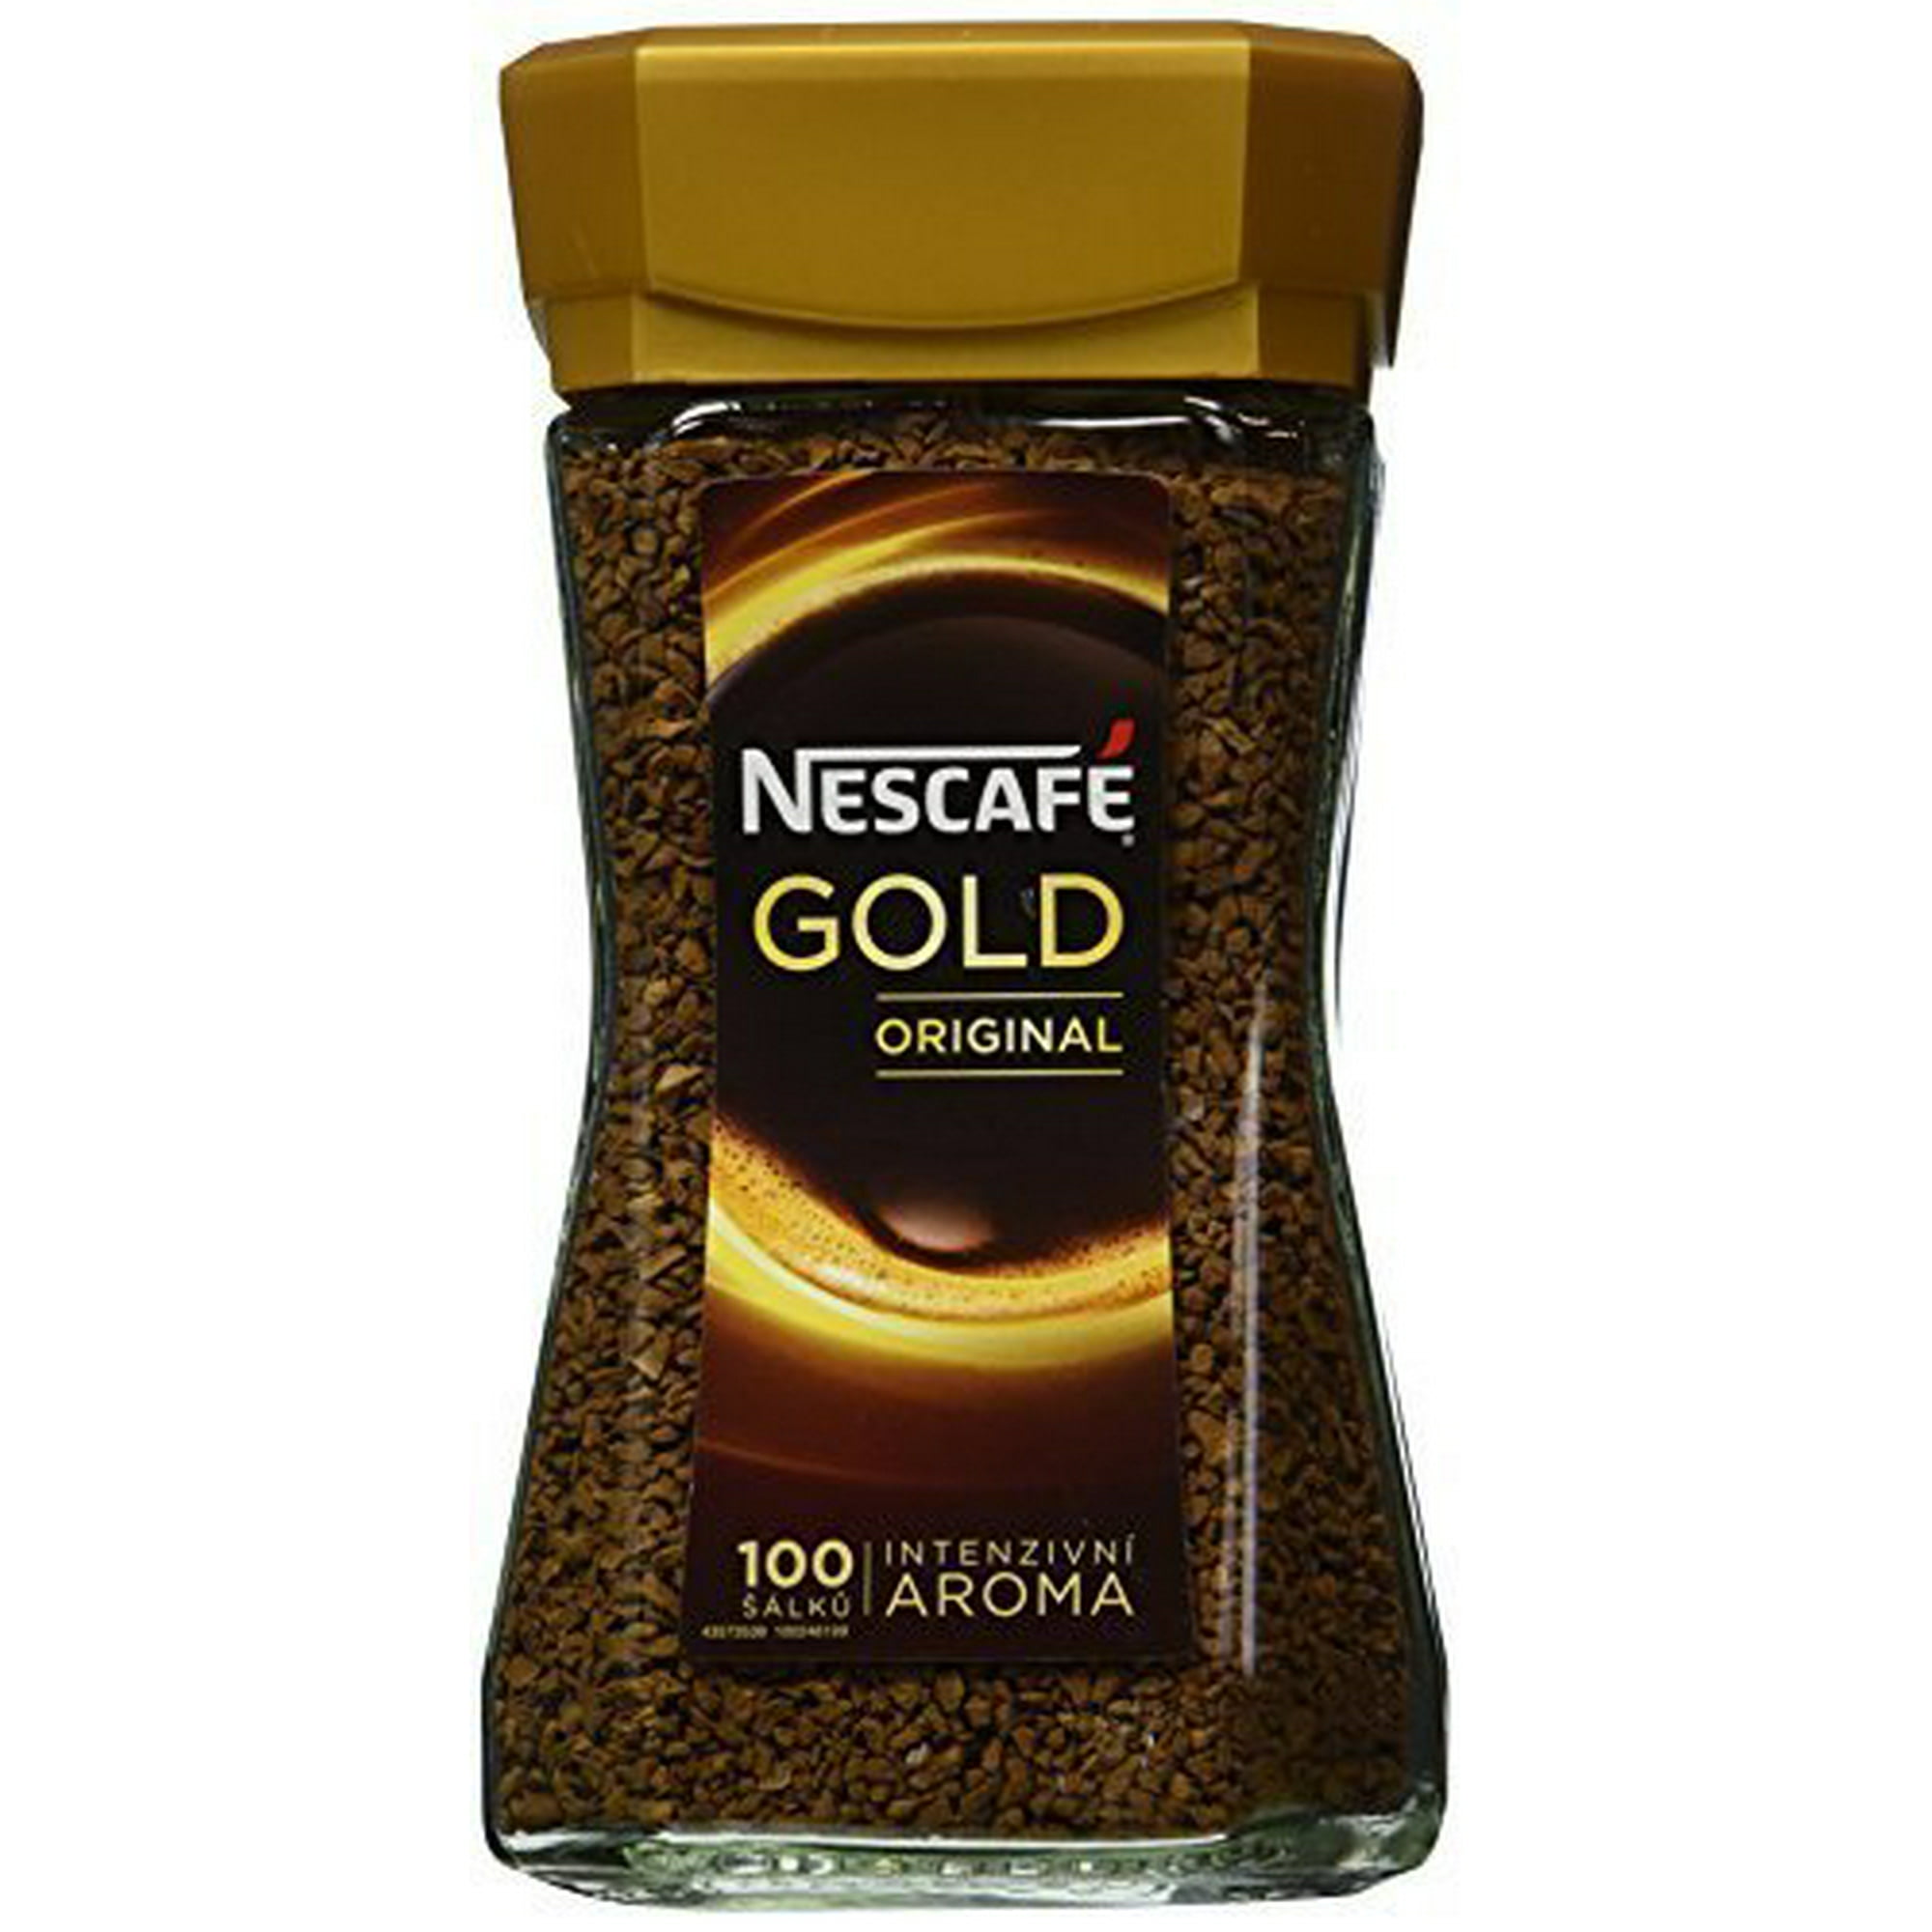 Nescafe Gold 200 gr. 7 Oz